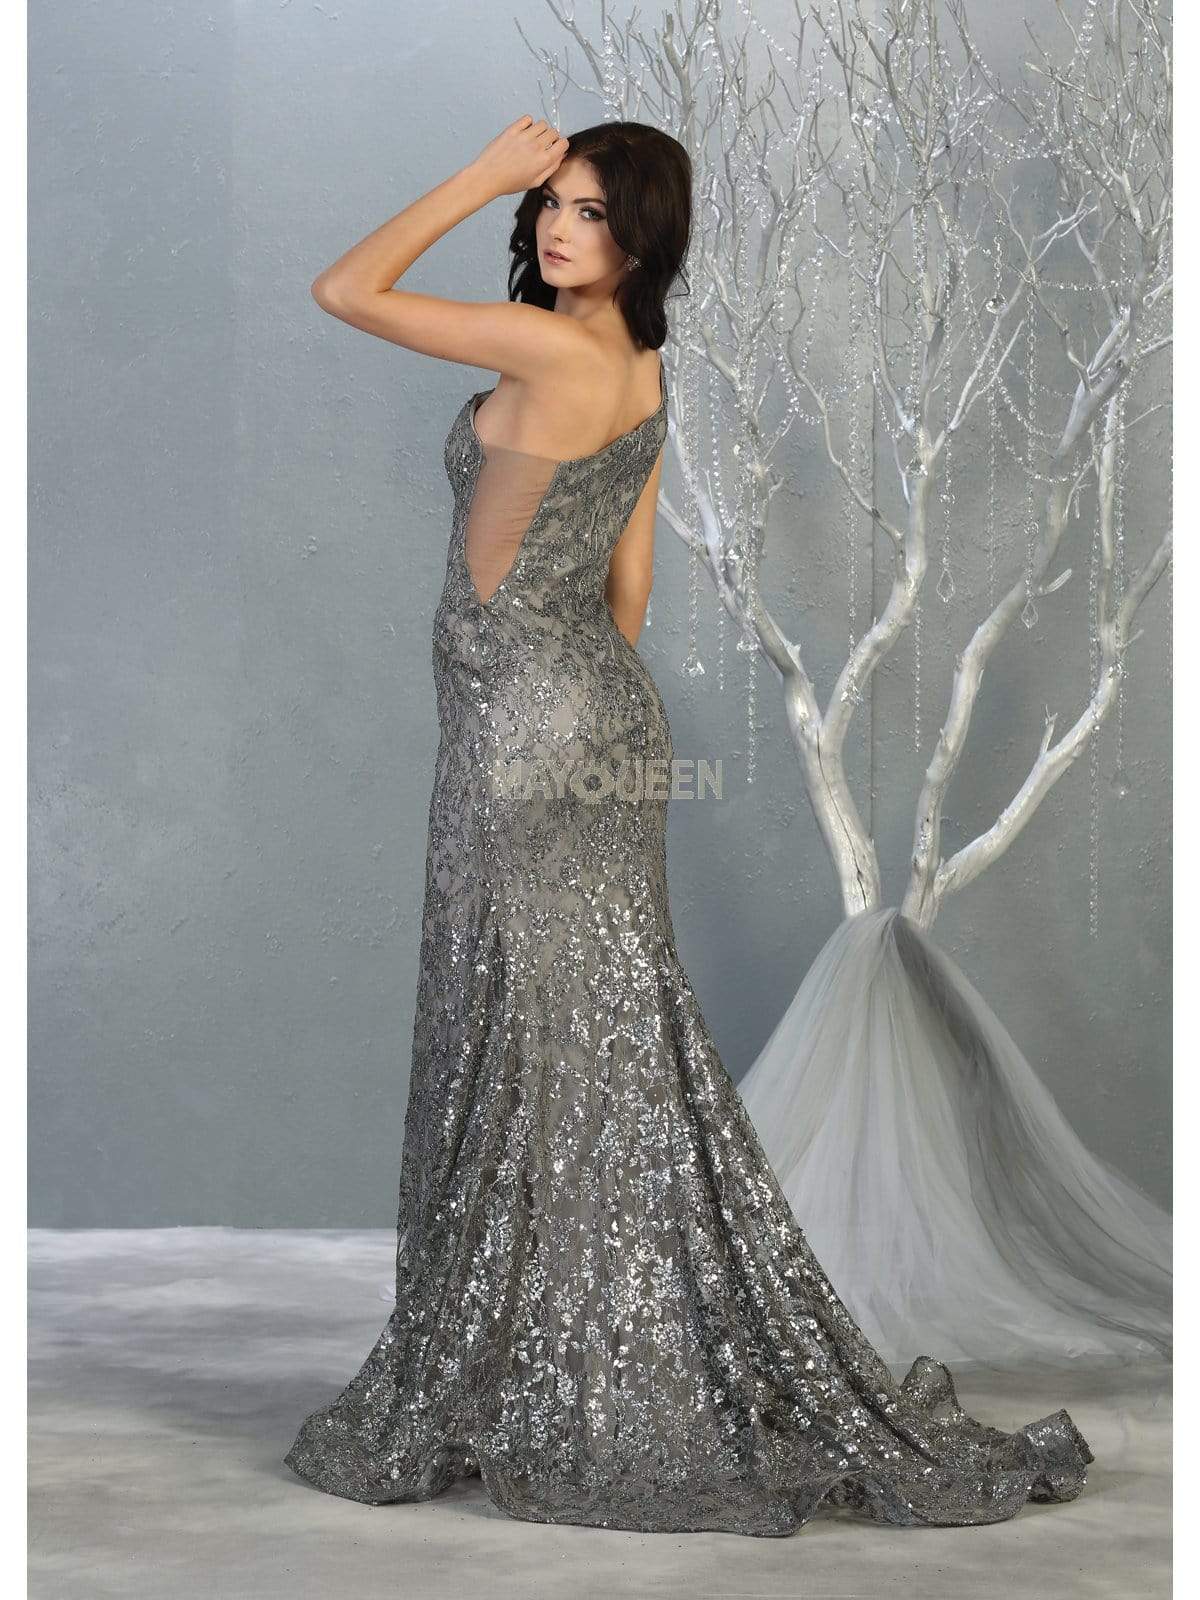 May Queen - MQ1804 Glitter Asymmetrical Mermaid Gown Evening Dresses